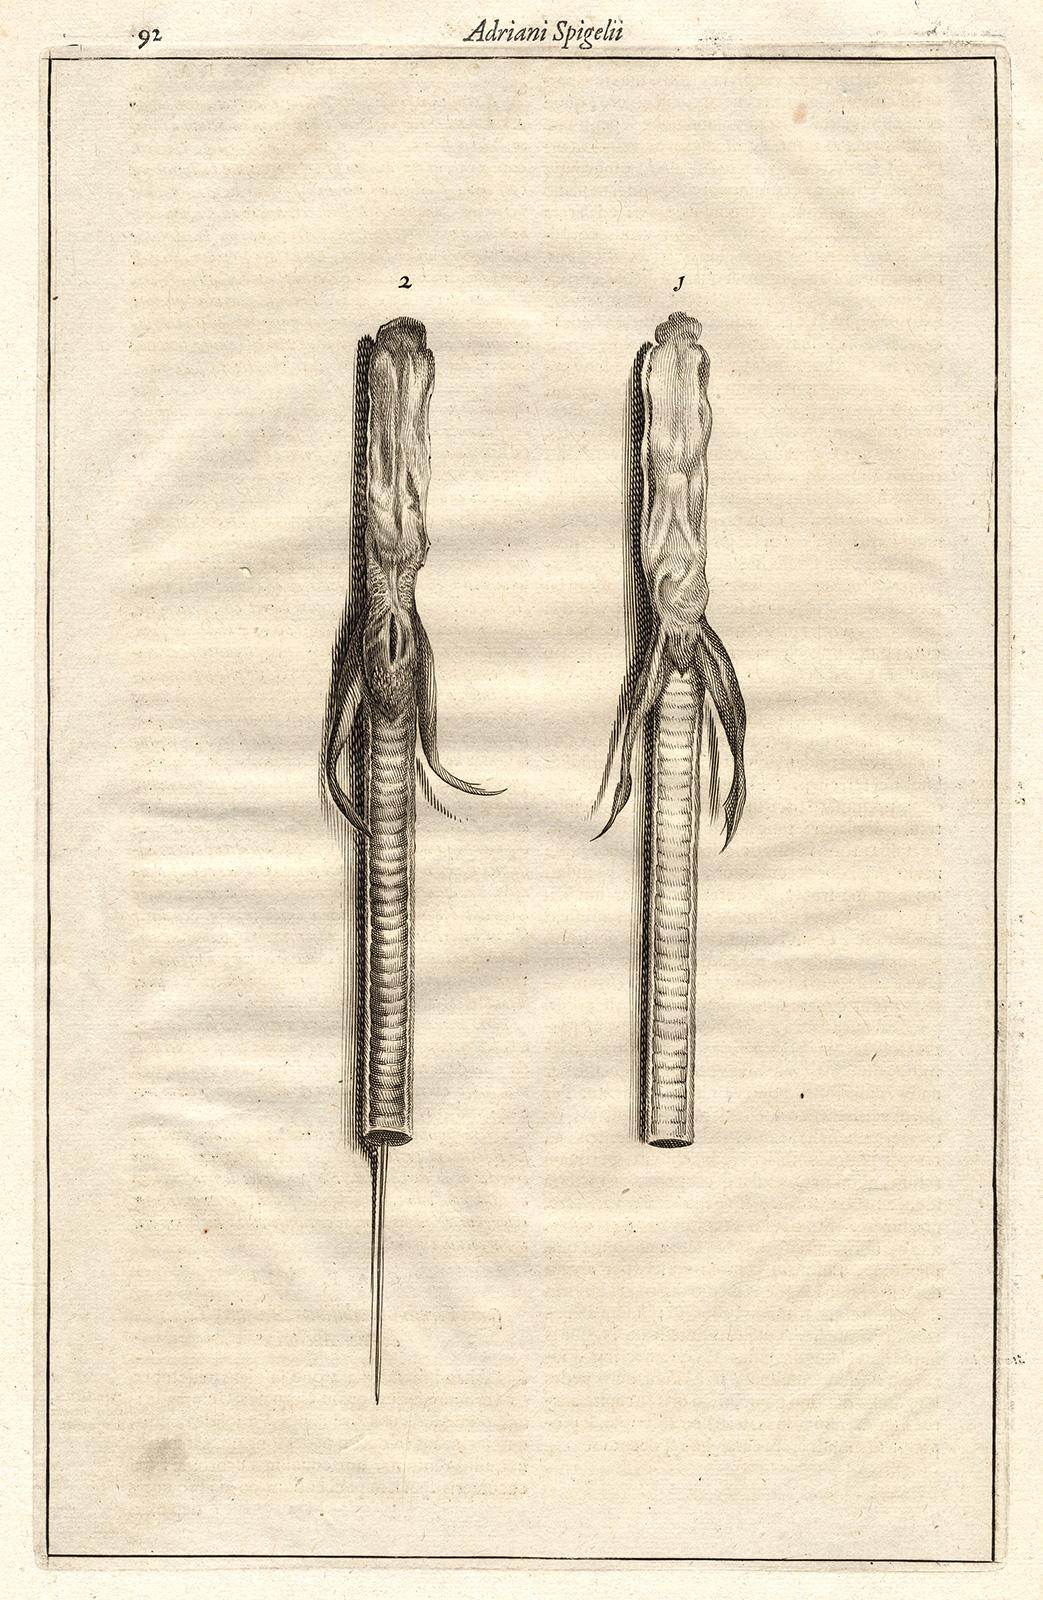 2 Anatomical prints - tapeworms - by Spigelius - Engraving - 17th c - Beige Print by Adrianus Spigelius